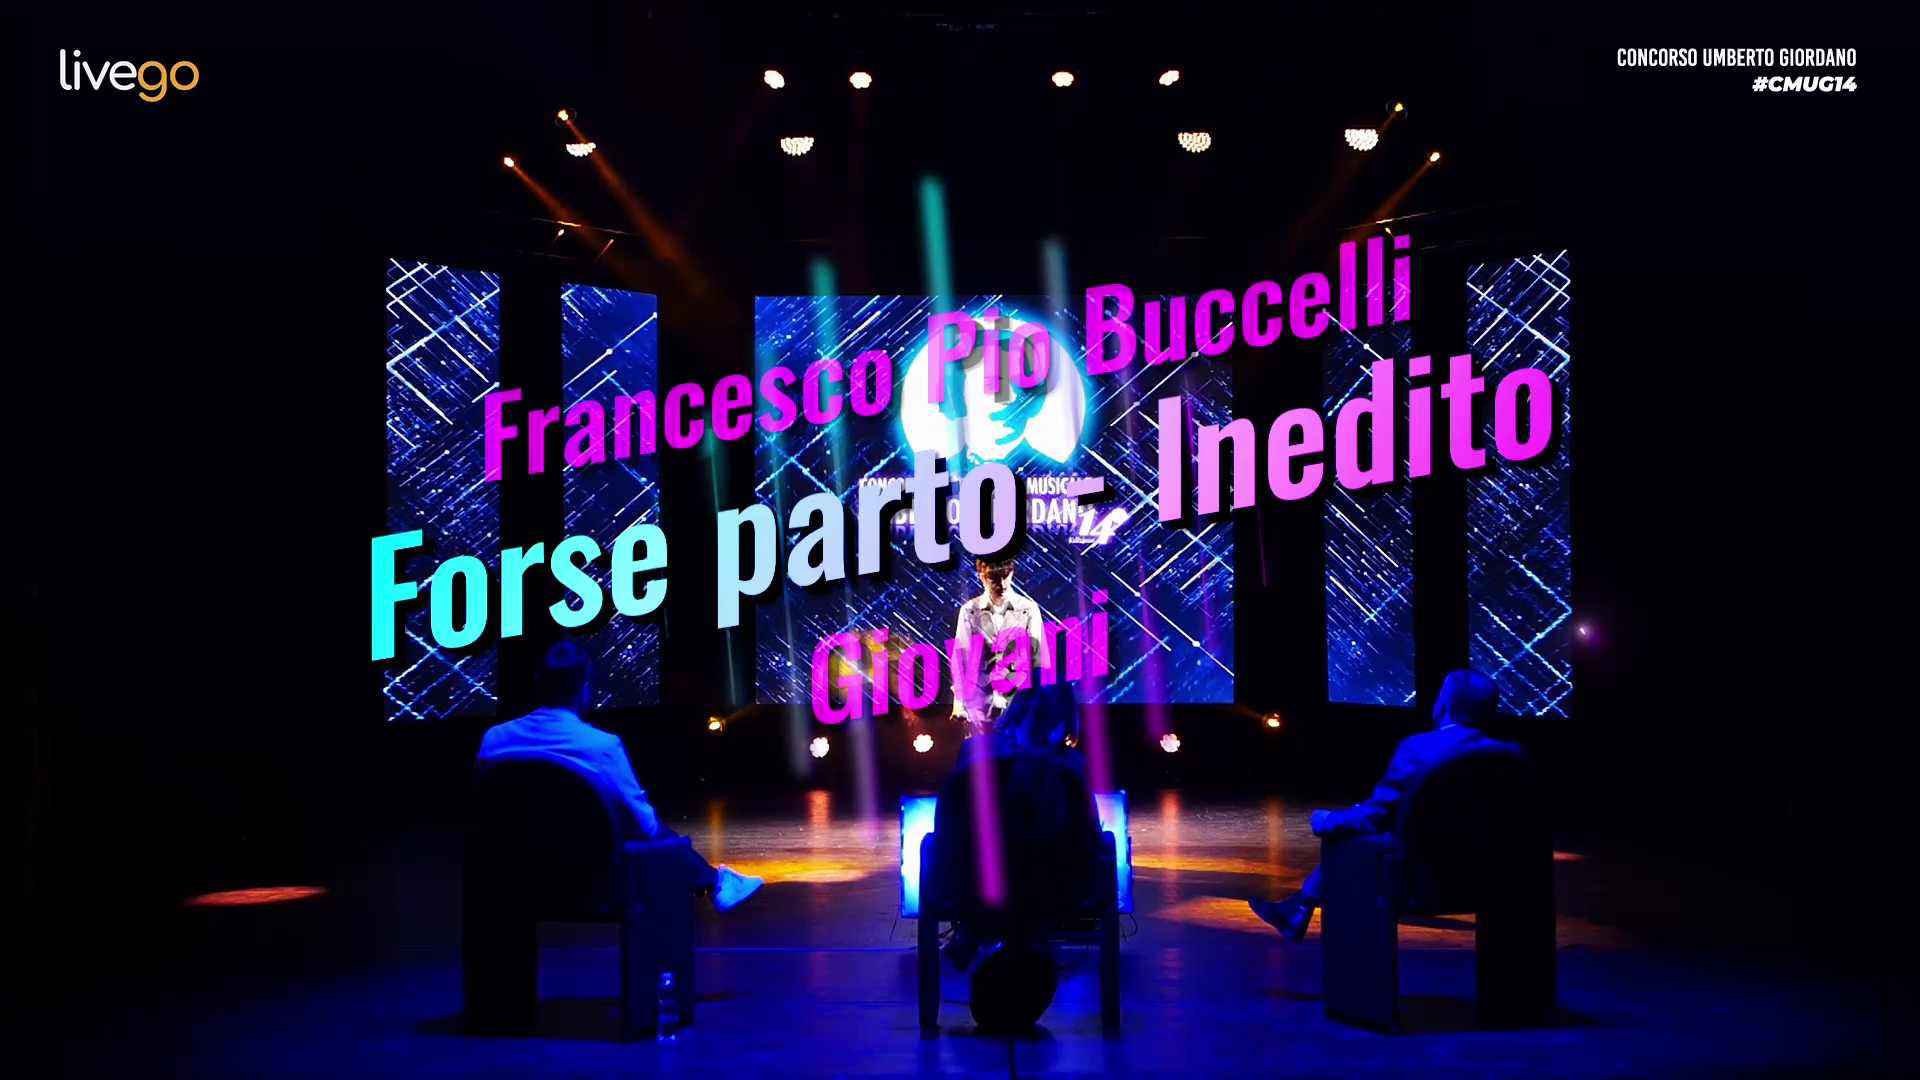 6 - Francesco Pio Bucelli